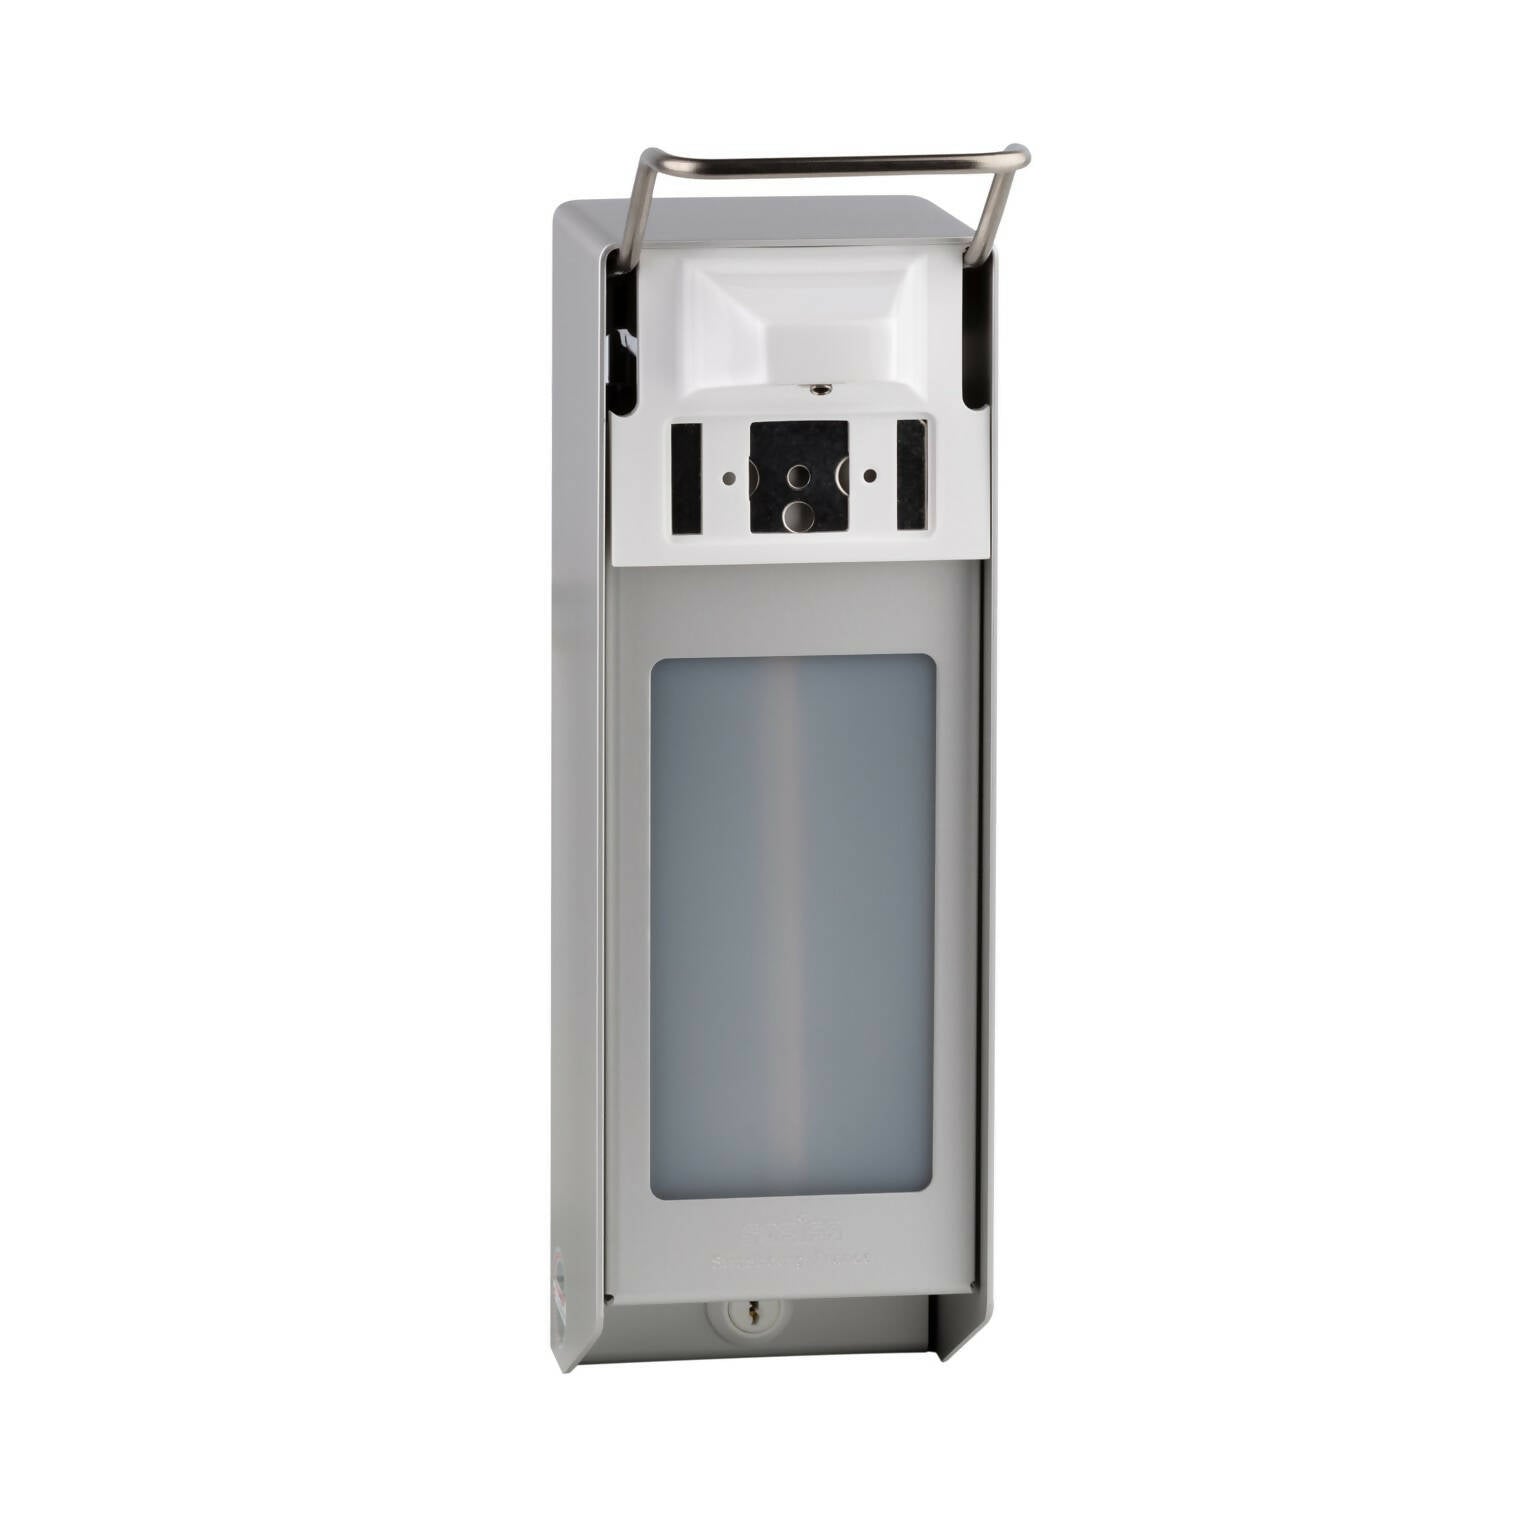 SORIFA - Set of 2 - Robust, ergonomic, lockable metal wall dispenser for 1L SORIFA brand bottle - For gels and liquid soaps. - 0